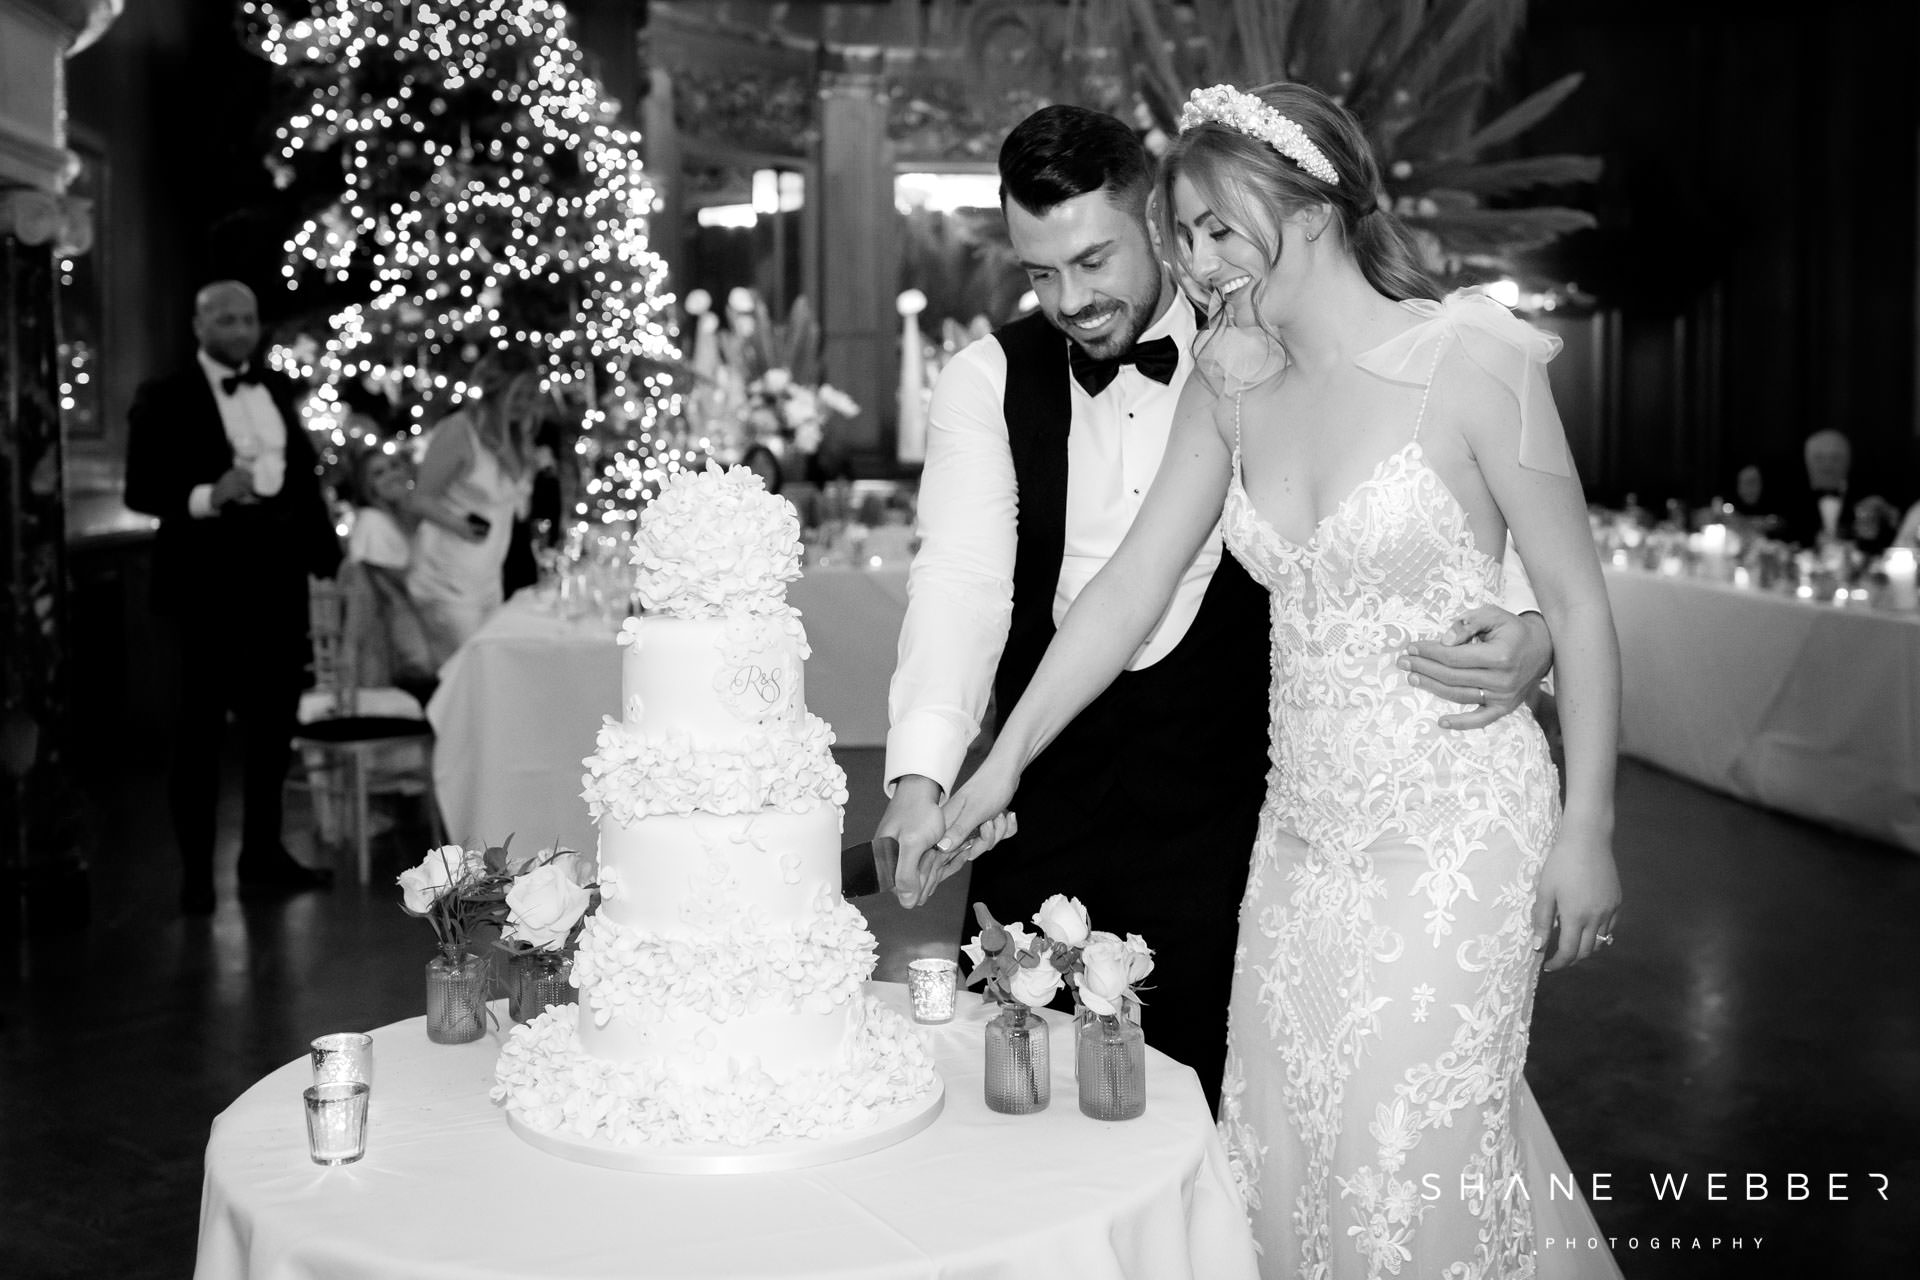 Wedding cake cut photo